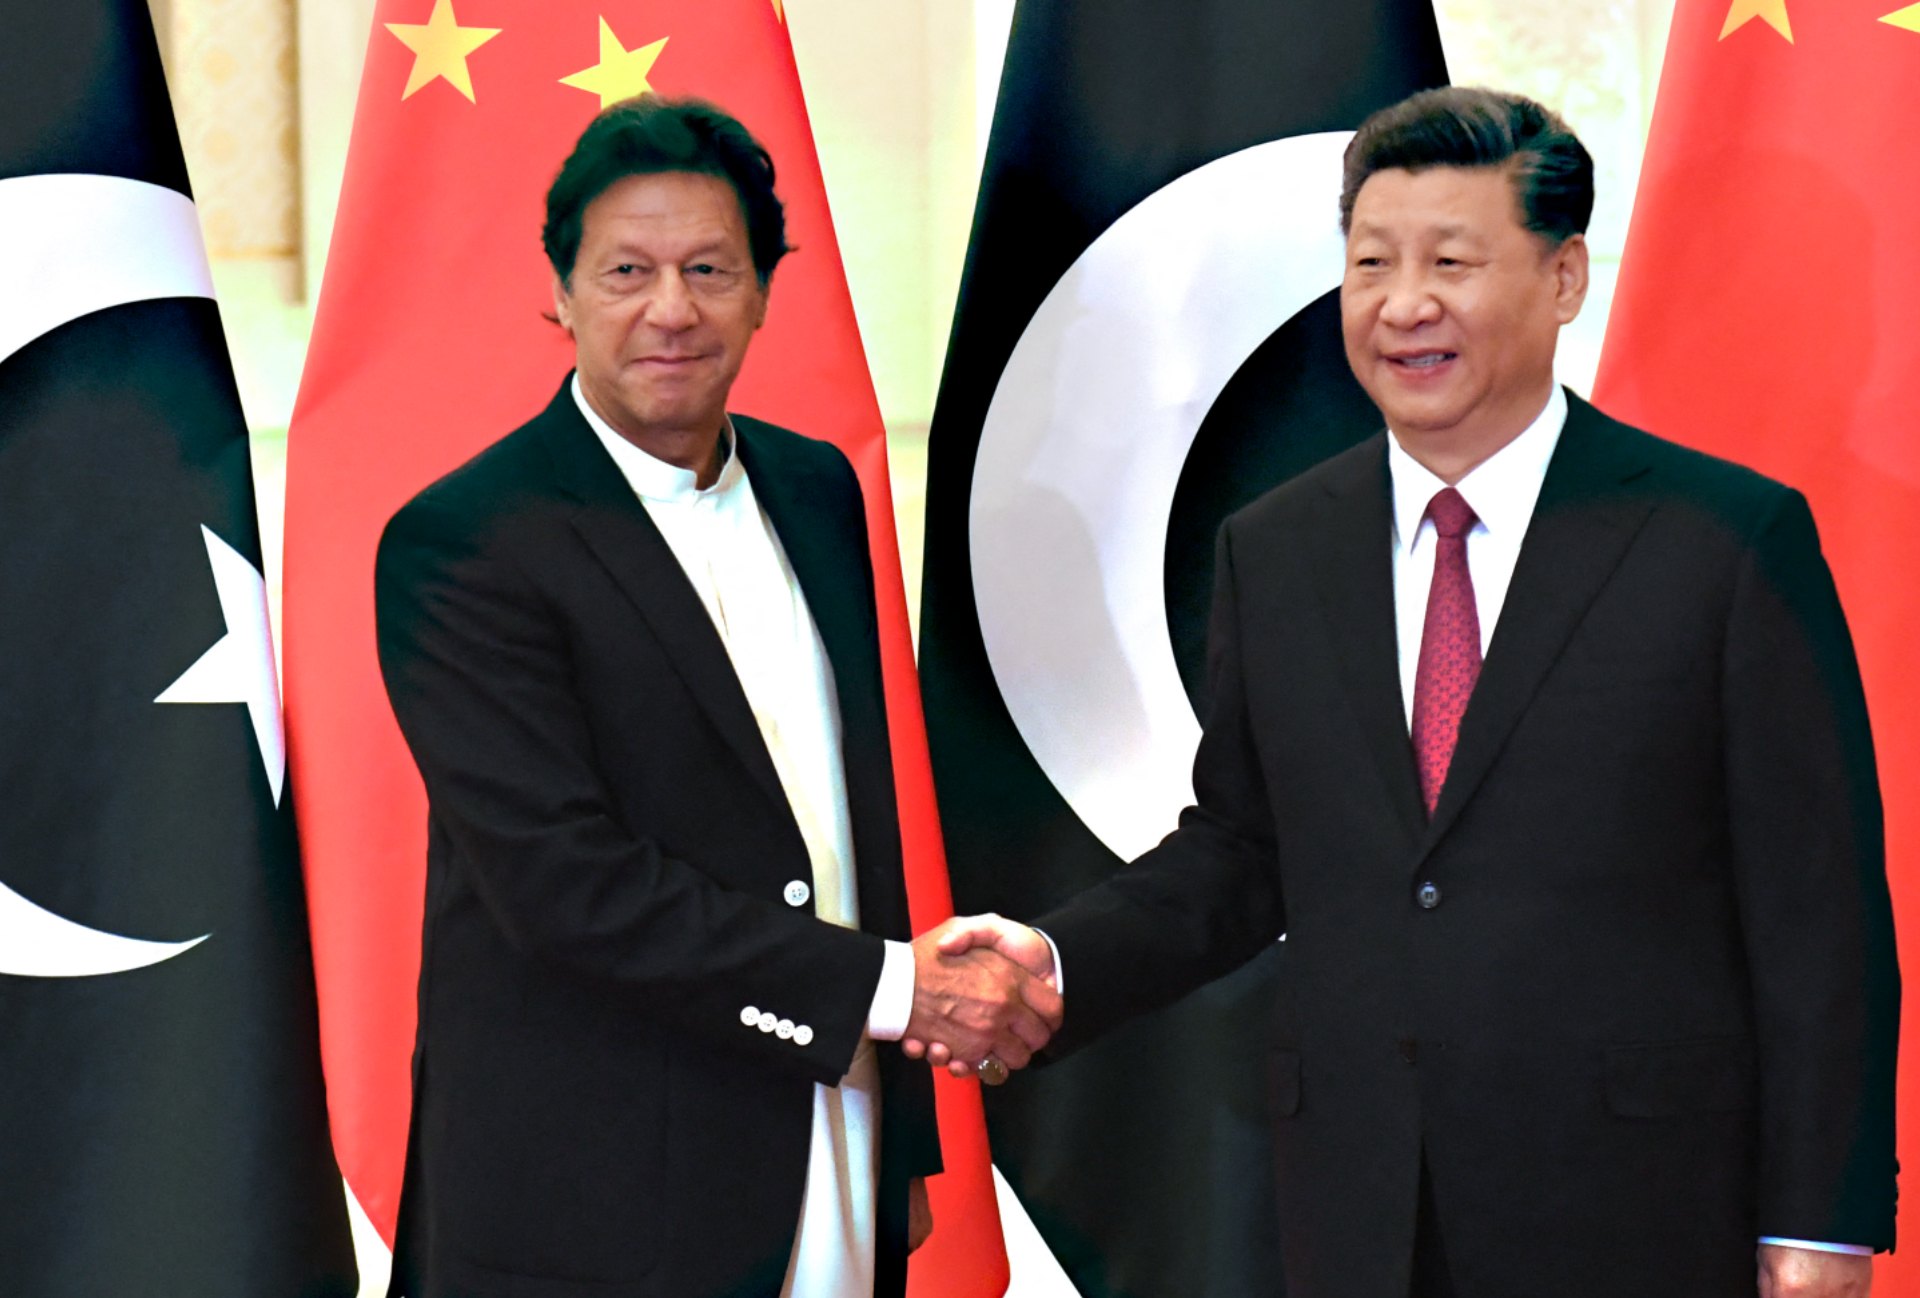 Chinese President Xi Jinping and Pakistani Prime Minister Imran Khan